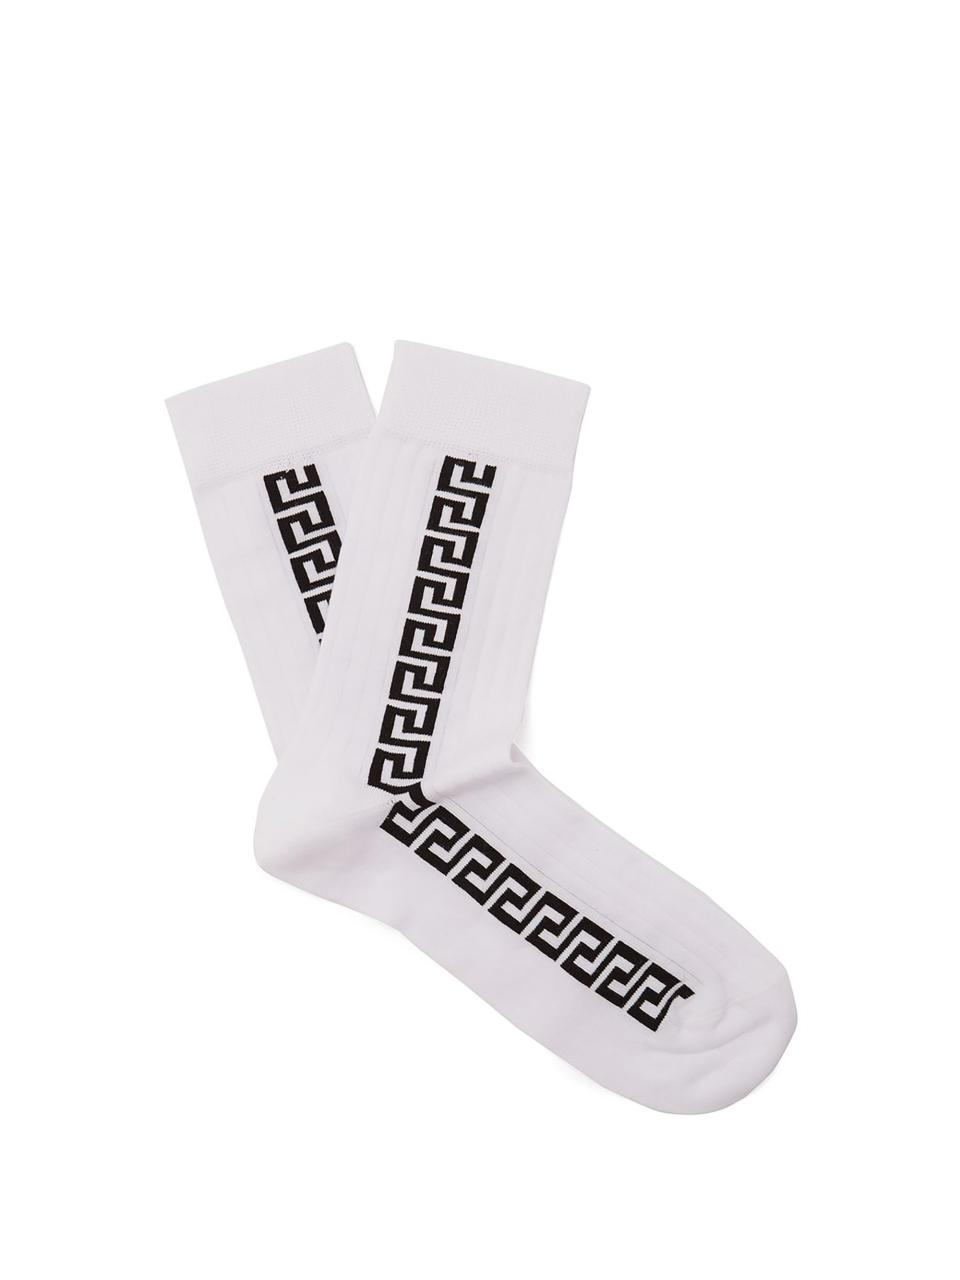 Versace socks (£60)